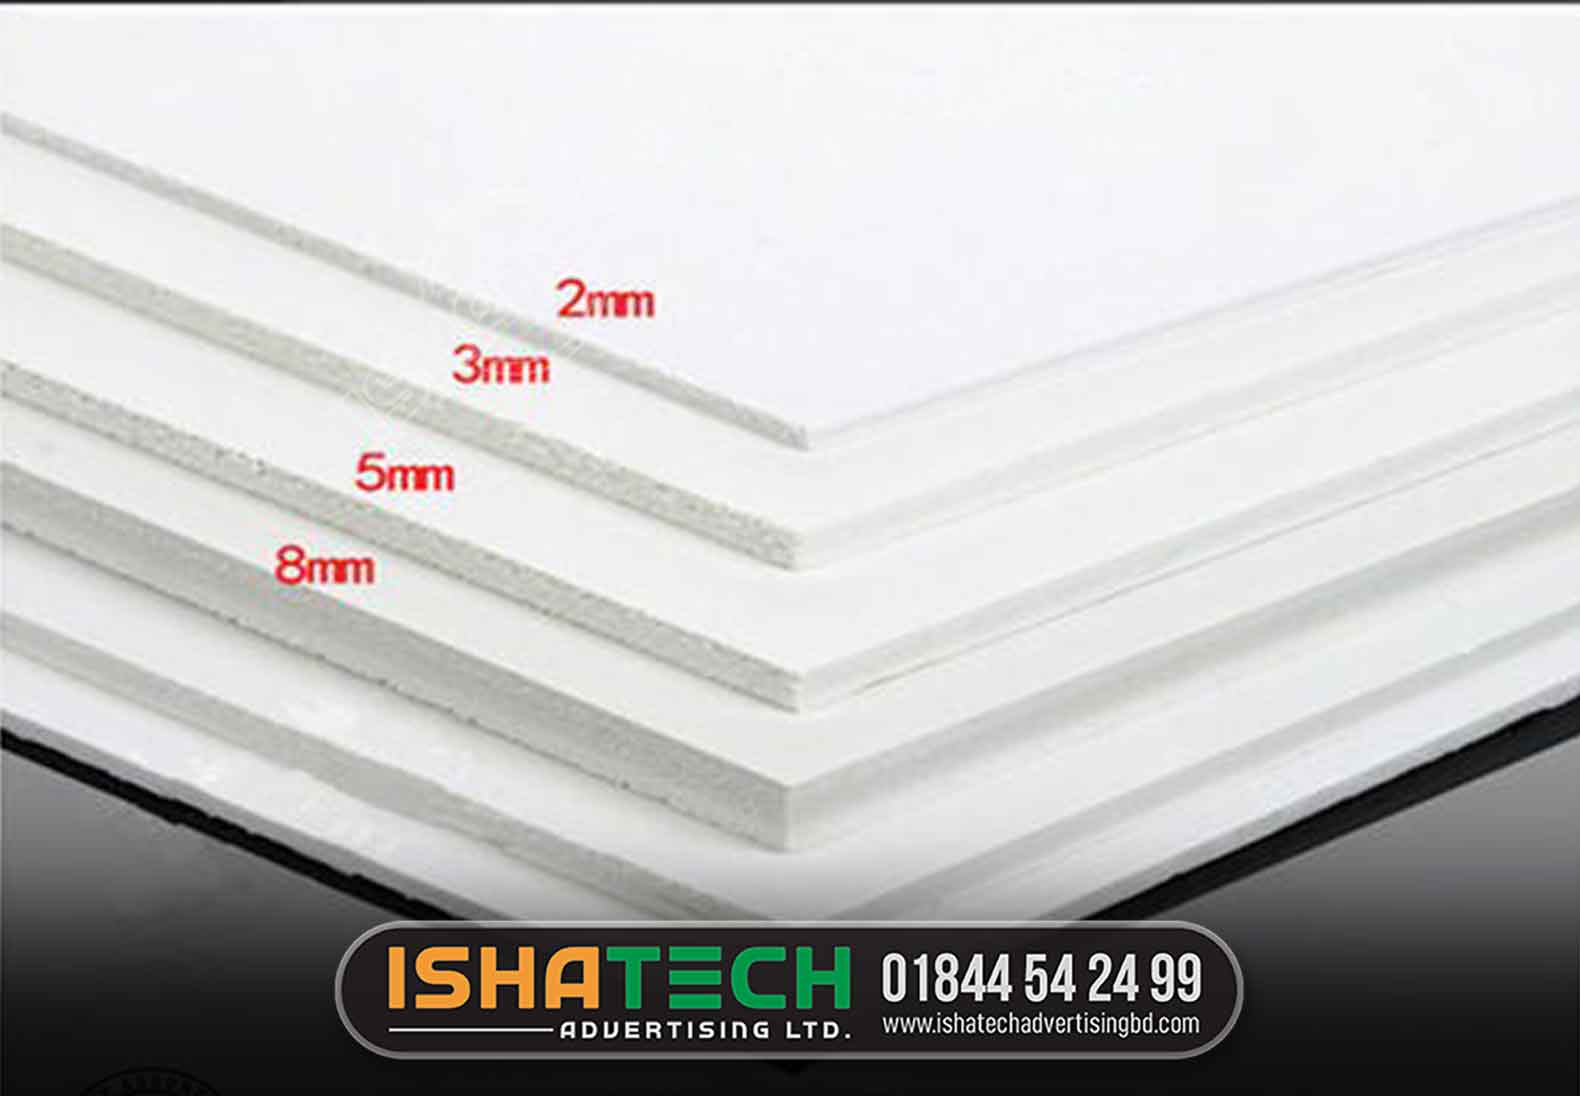 Get More PhotosView Similar White PVC Foam Board Sheet, 1.80mm To 15.00mm | White Pvc Sunboard Sheet, Thickness: 1-2 Mm